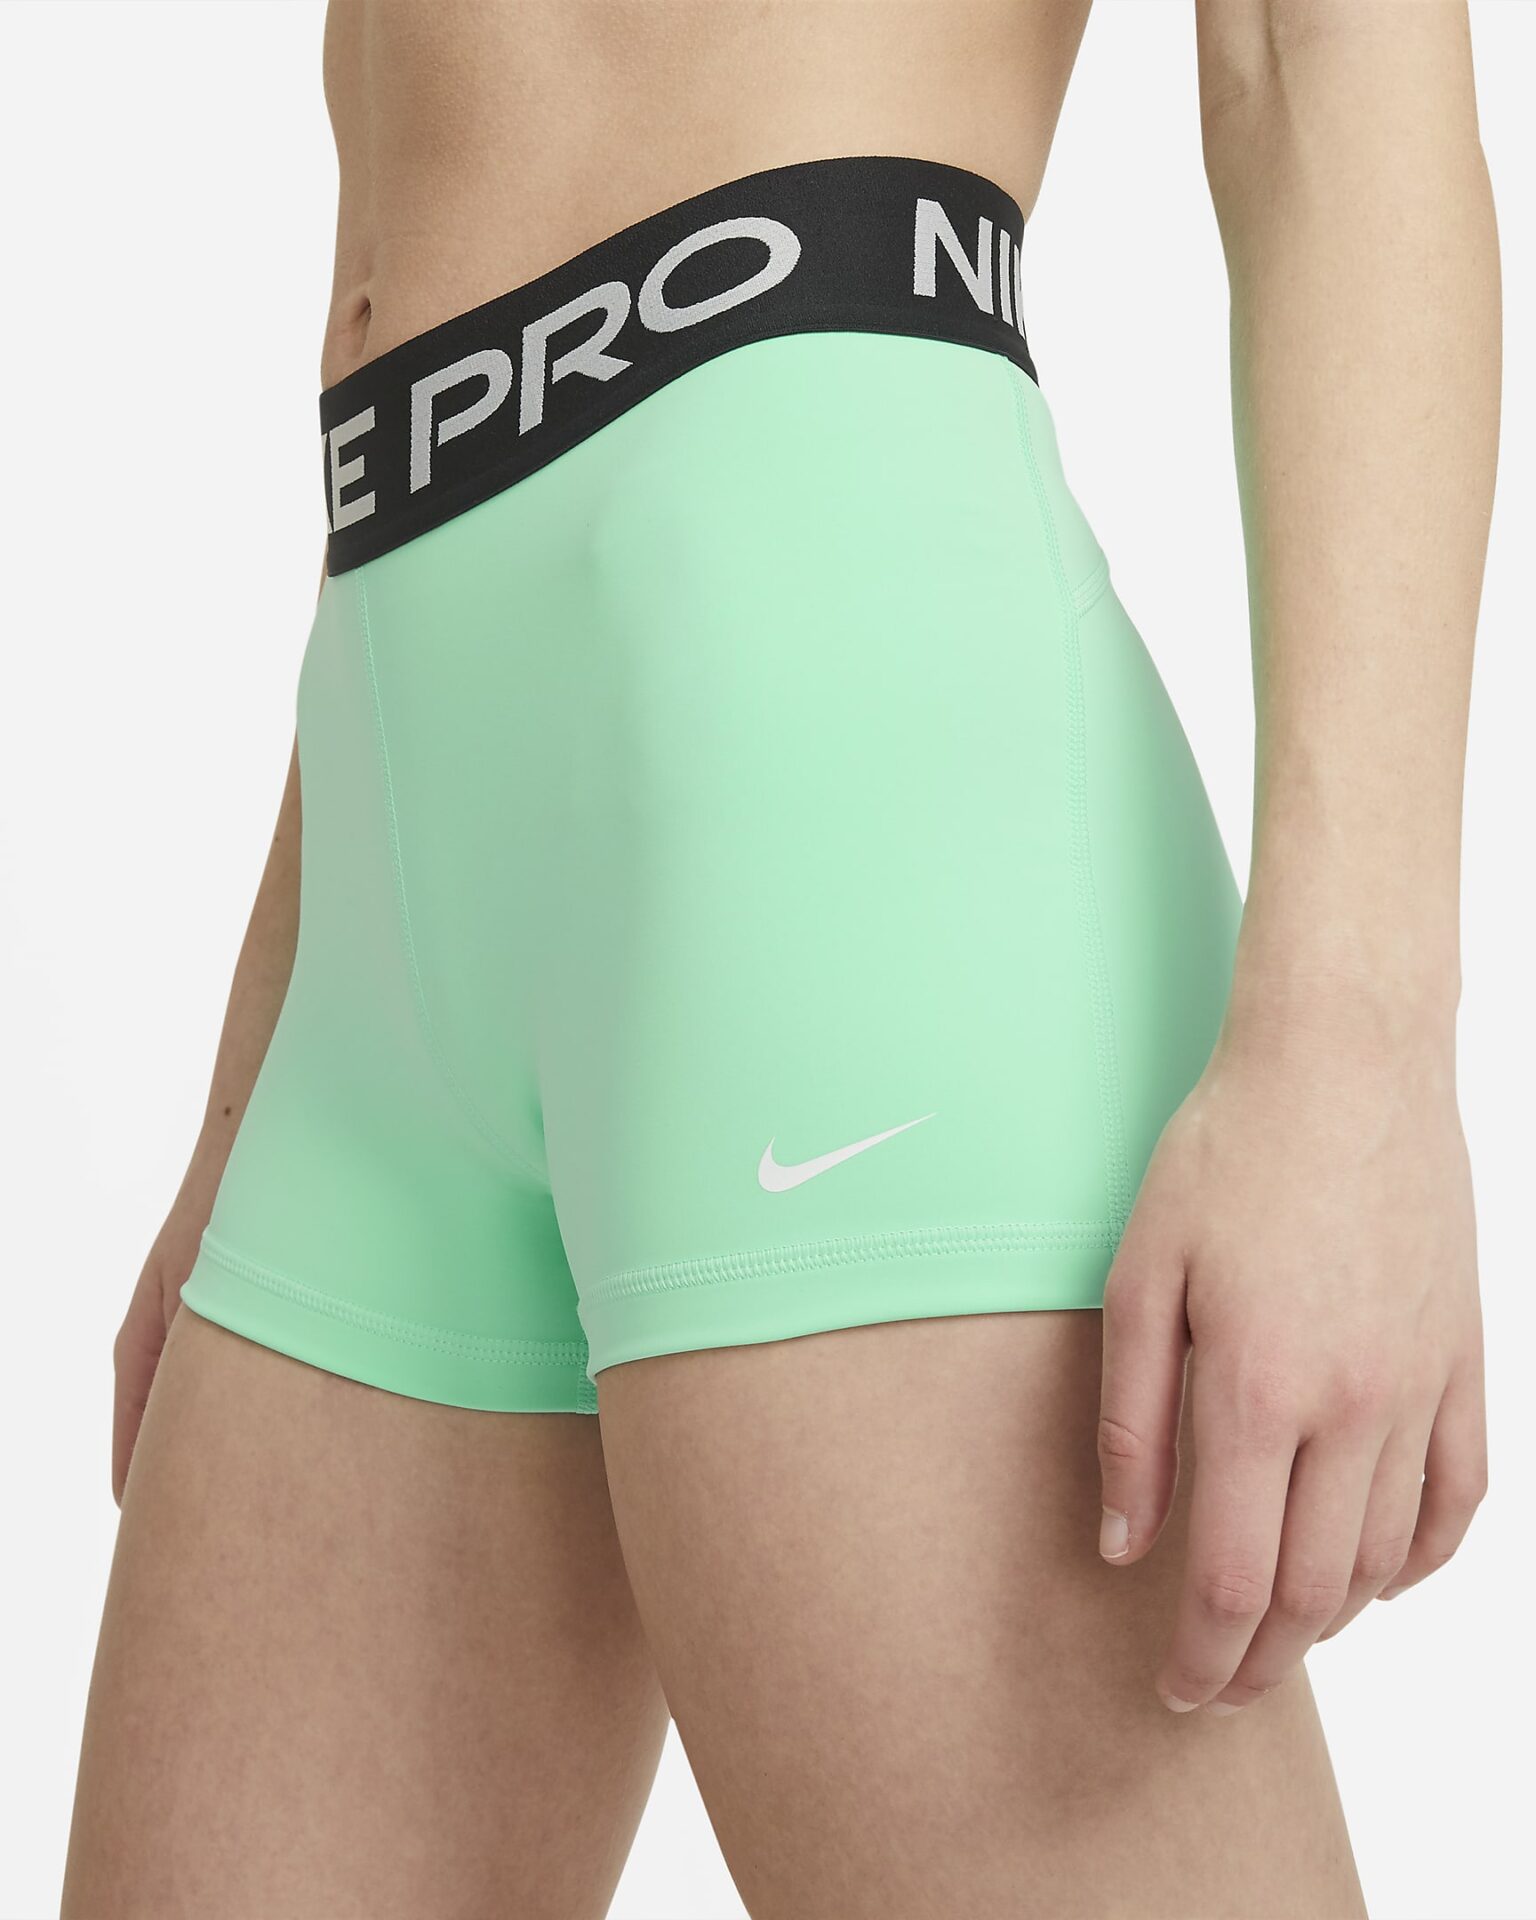 flåde strøm Rudyard Kipling Nike [M] Women's Pro 3'' Training Shorts, Green Glow/Black/White, Style:  CZ9857-342 – VALLEYSPORTING